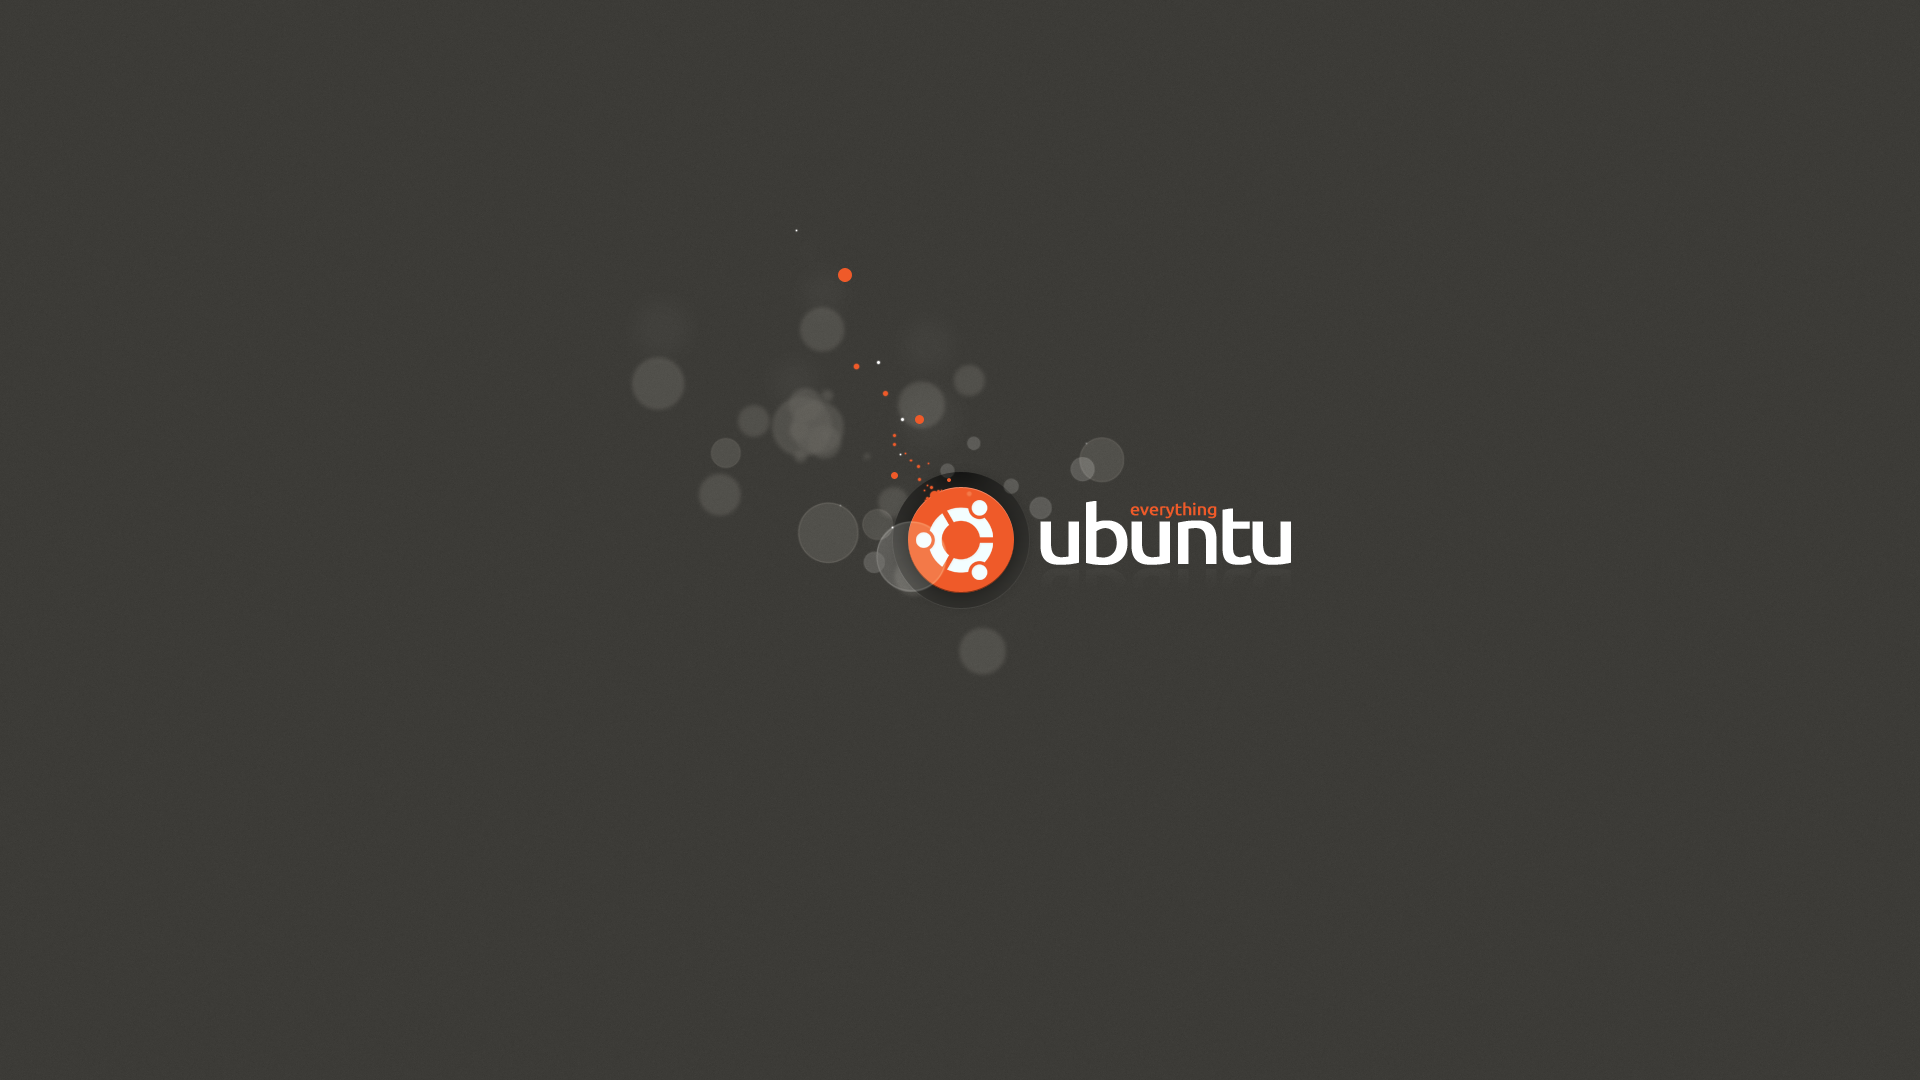 ubuntu wallpaper dark hd